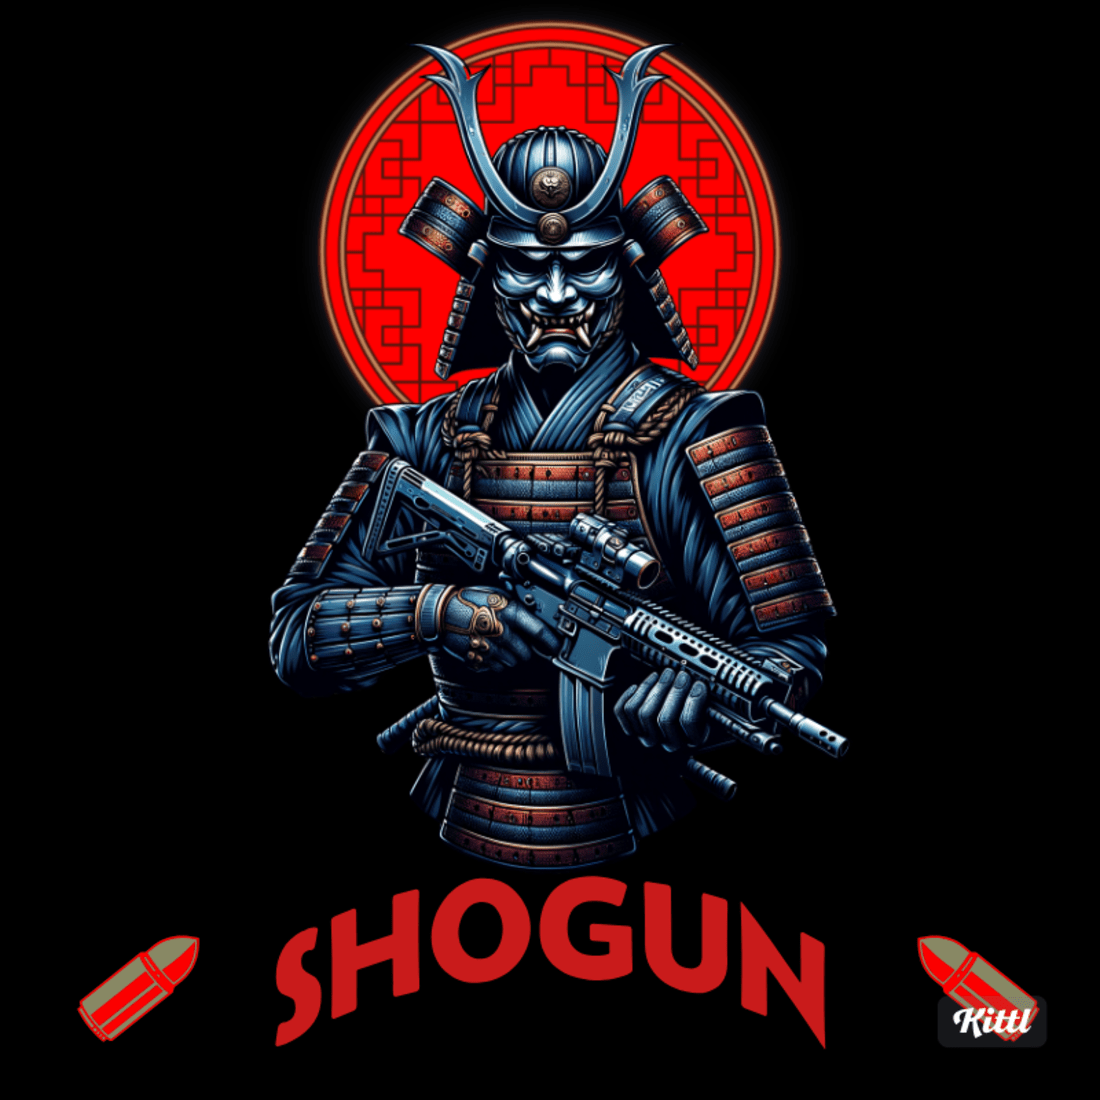 shogun T-shirt cover image.